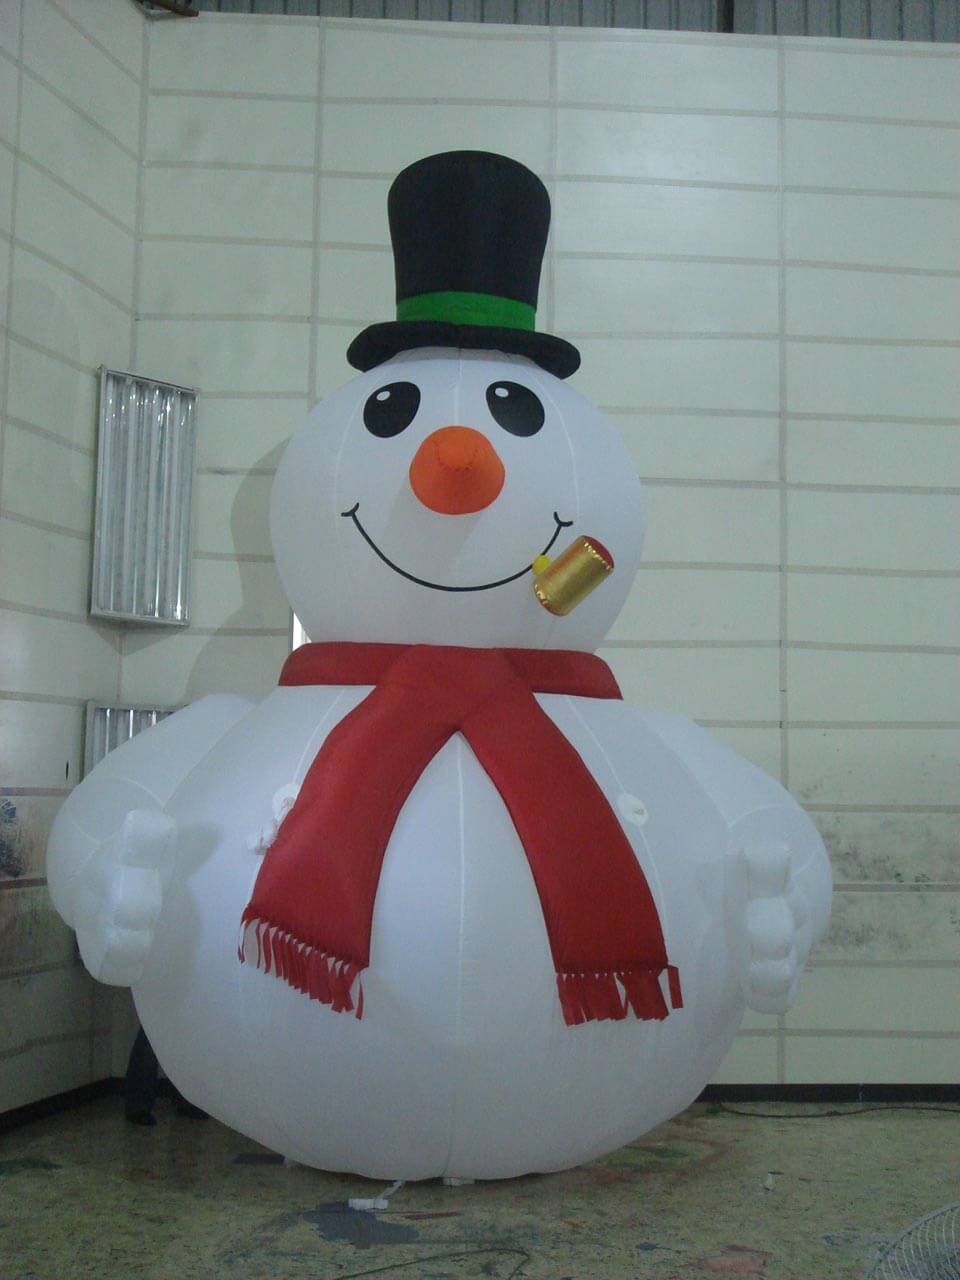 Air filled snow man in hat balloon紳士帽雪人抽煙斗充氣氣球